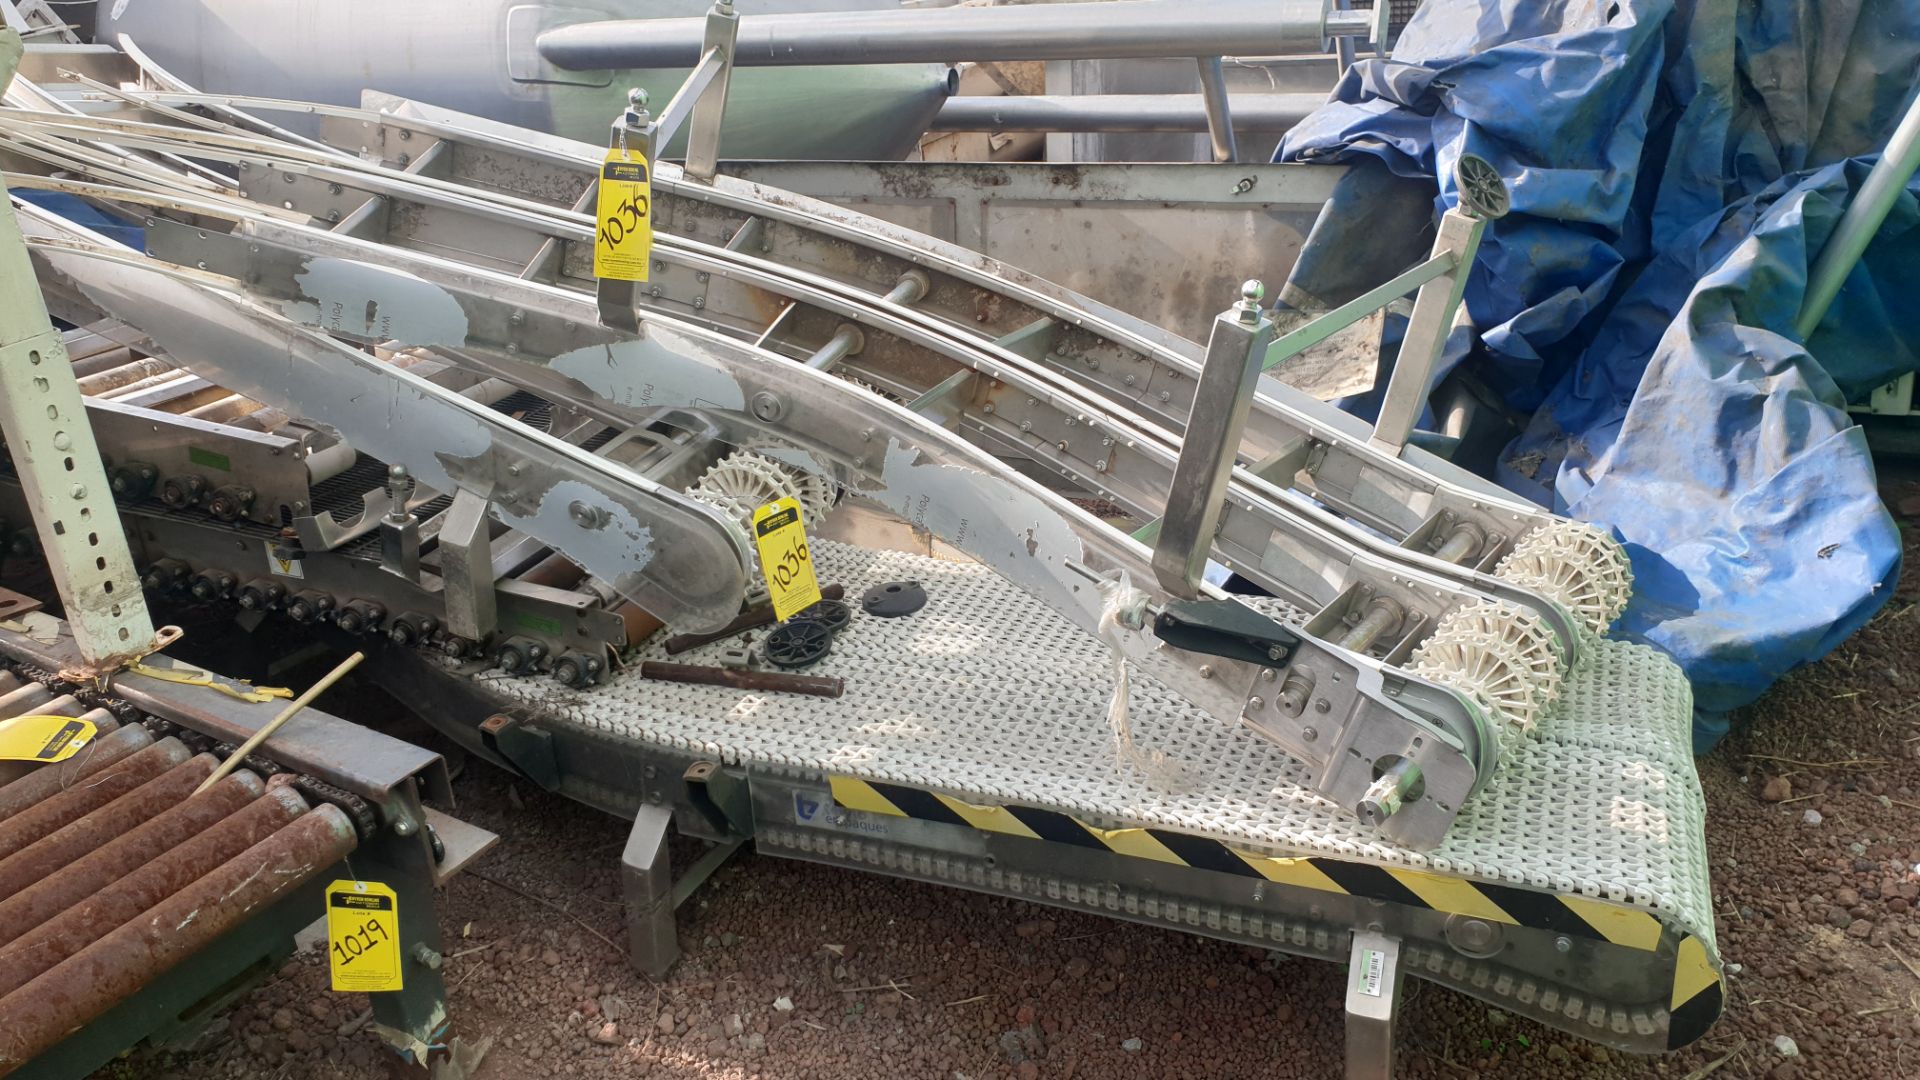 S conveyor belt batch. Please inspect - Image 5 of 9